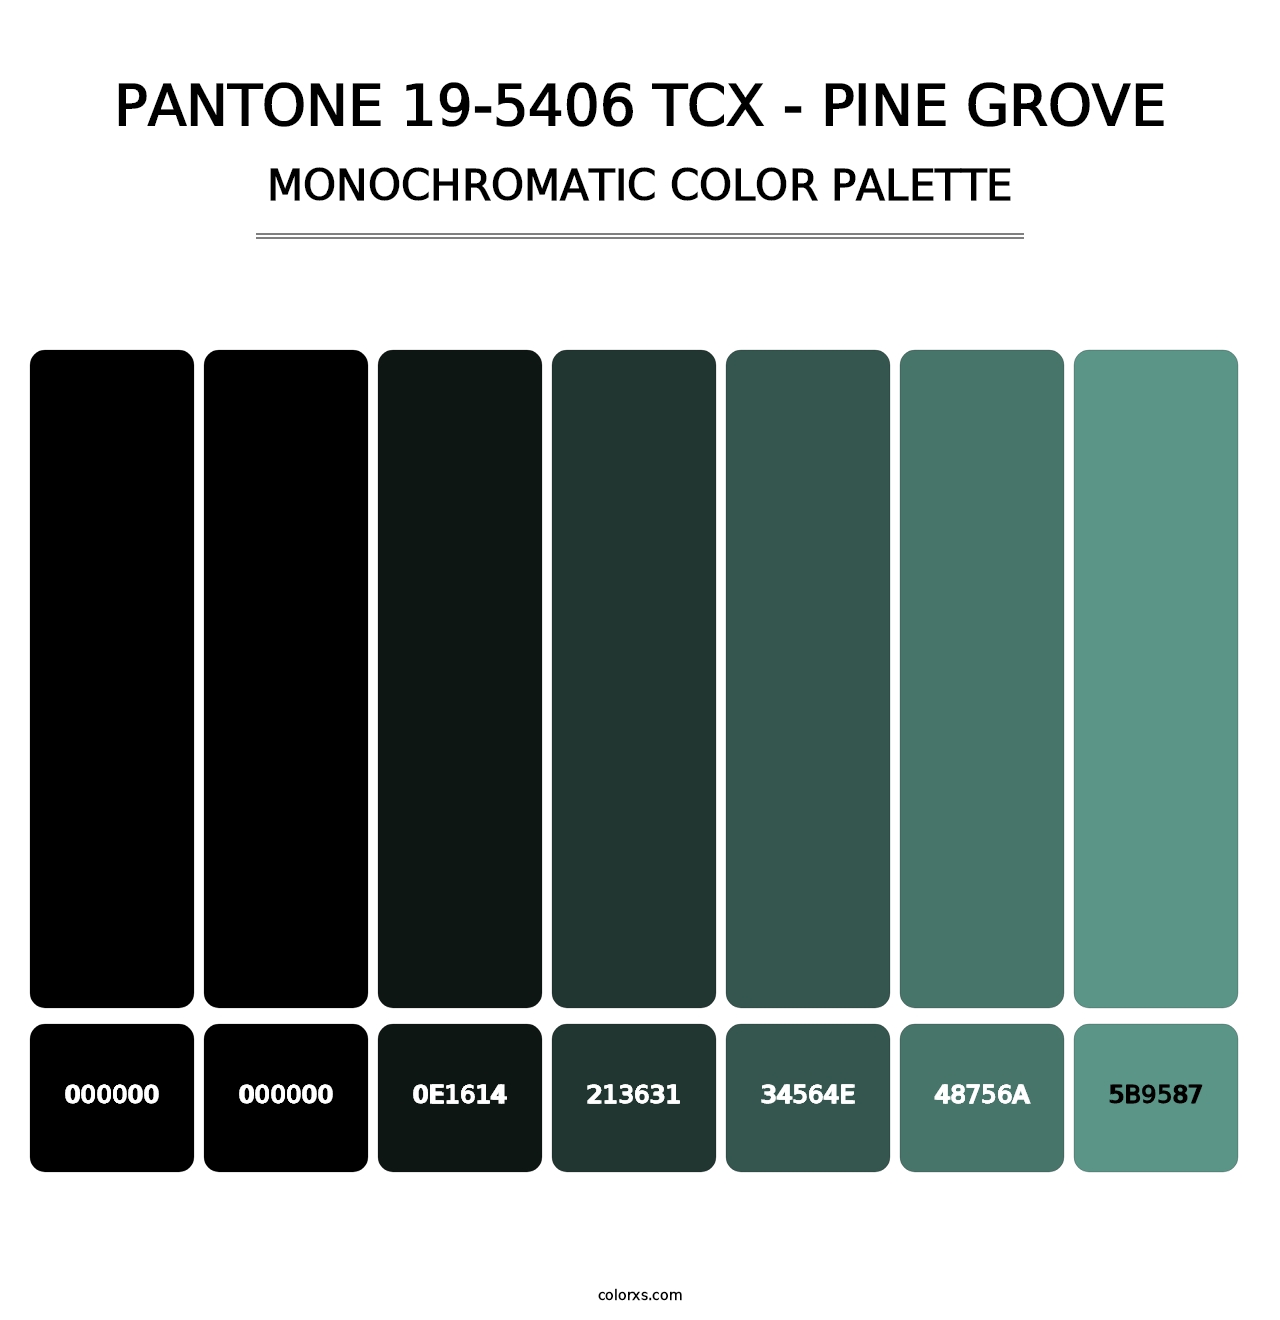 PANTONE 19-5406 TCX - Pine Grove - Monochromatic Color Palette